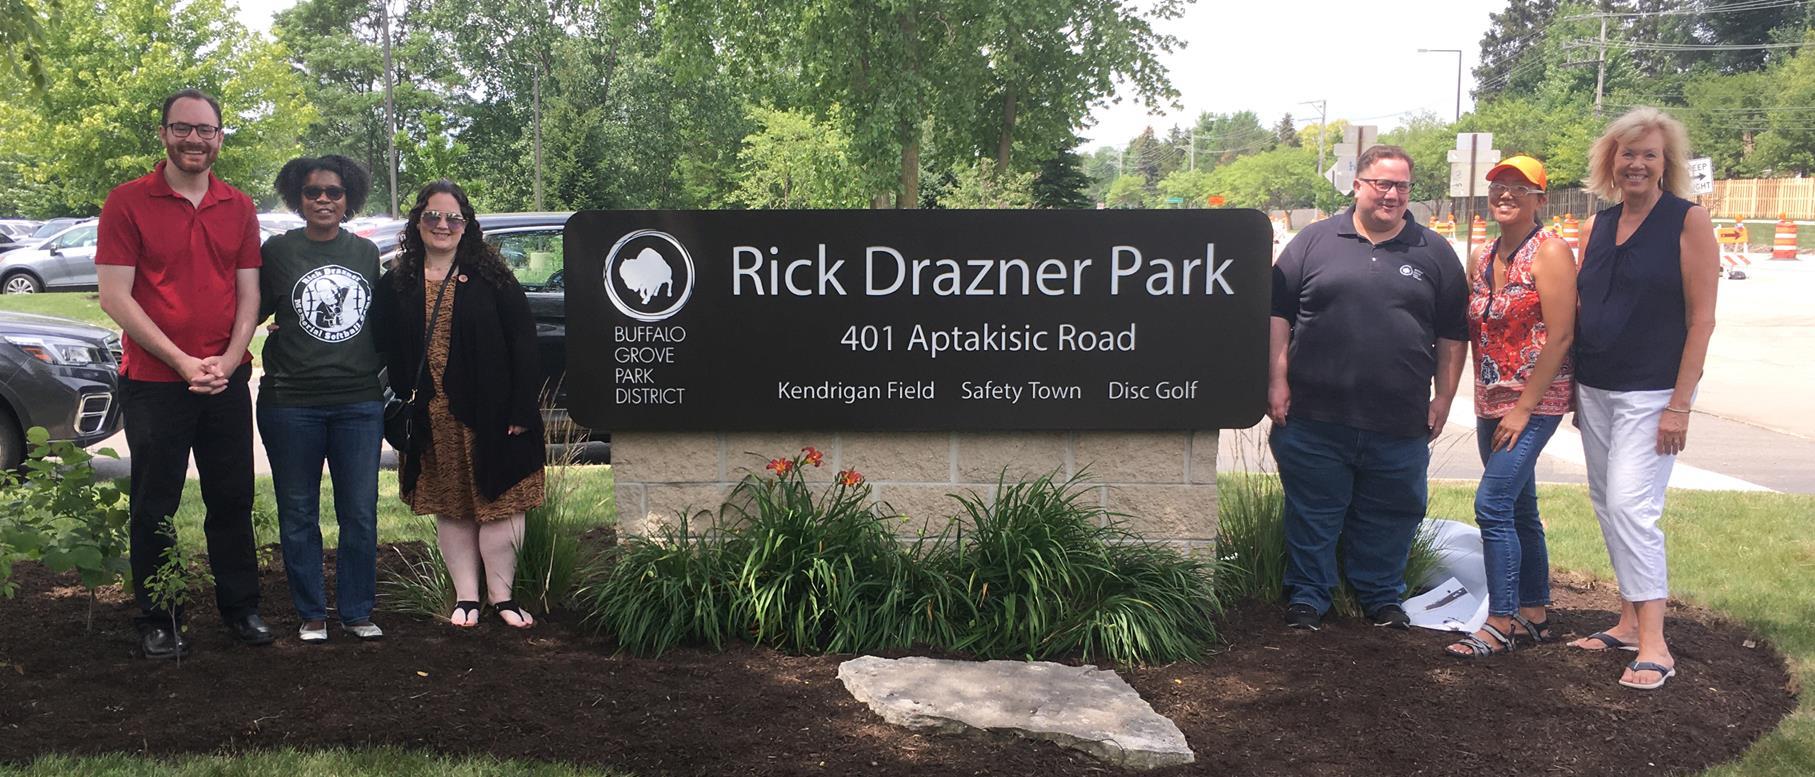 jorden dominere Prisnedsættelse Rick Drazner Park Dedication | Rotary Club of Buffalo Grove